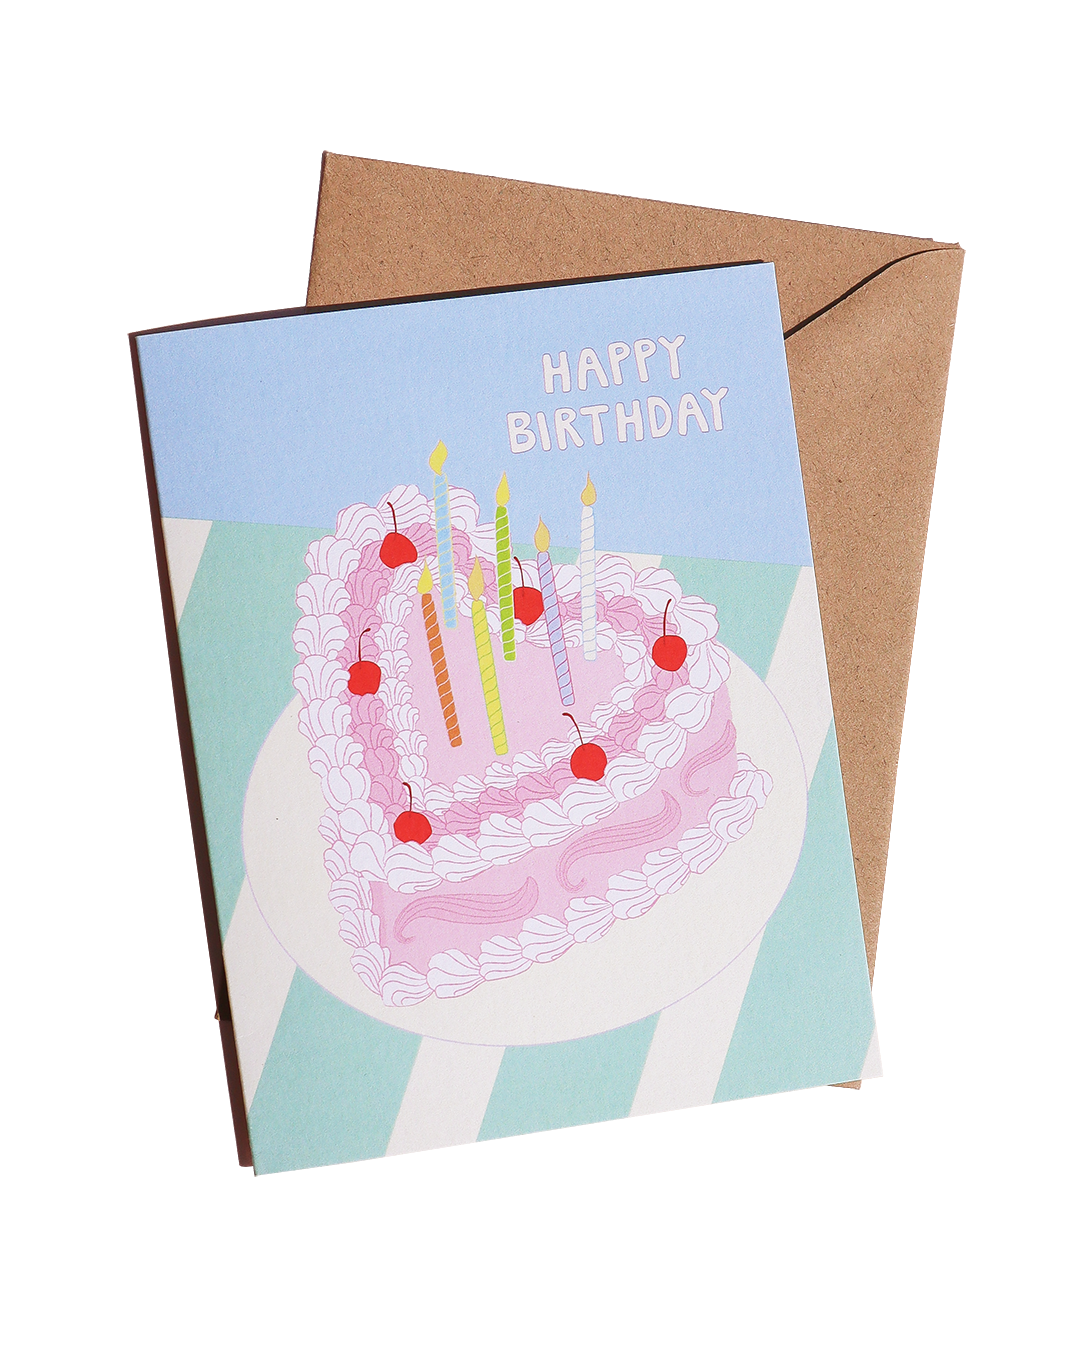 BIRTHDAY CAKE CARD